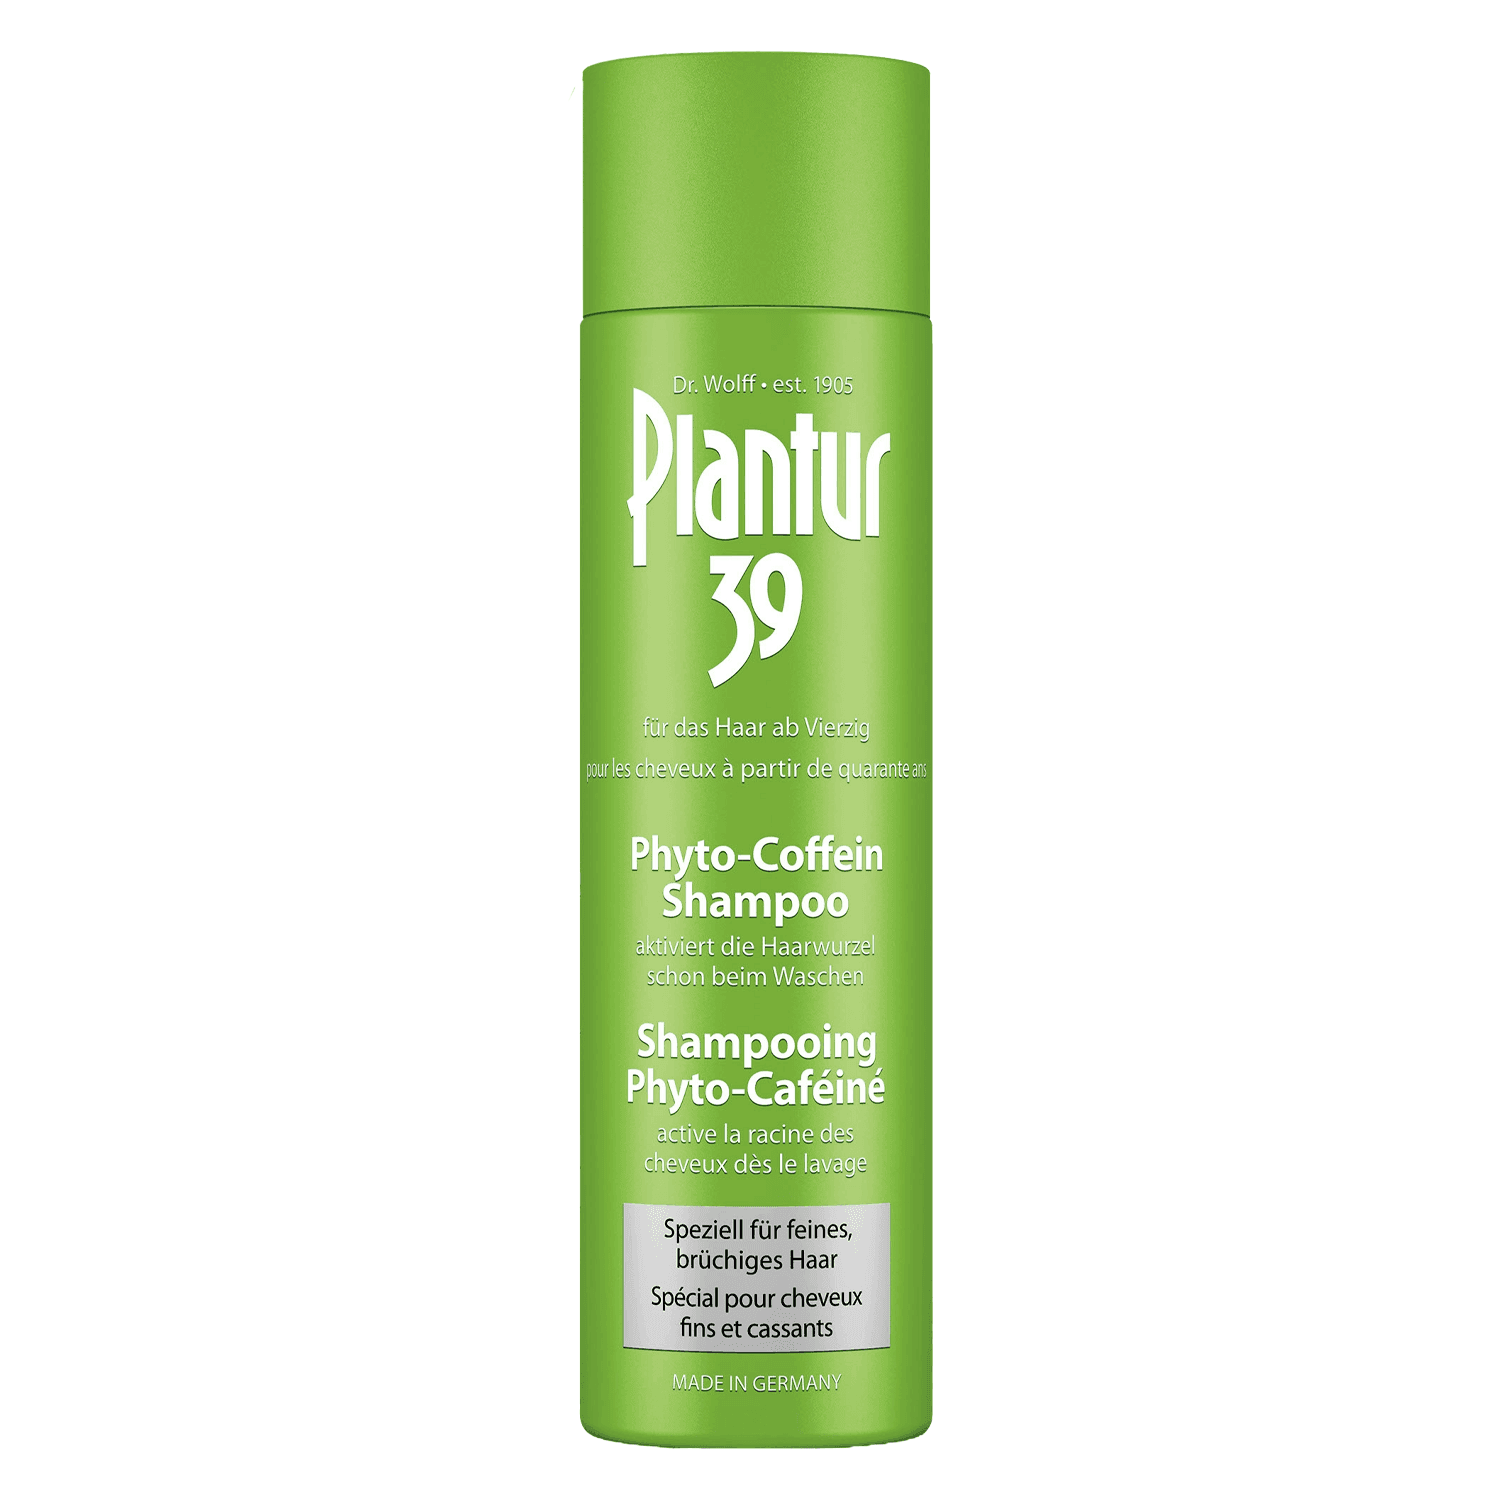 Plantur 39 - Phyto-Caffeine Shampoo For fine, brittle hair